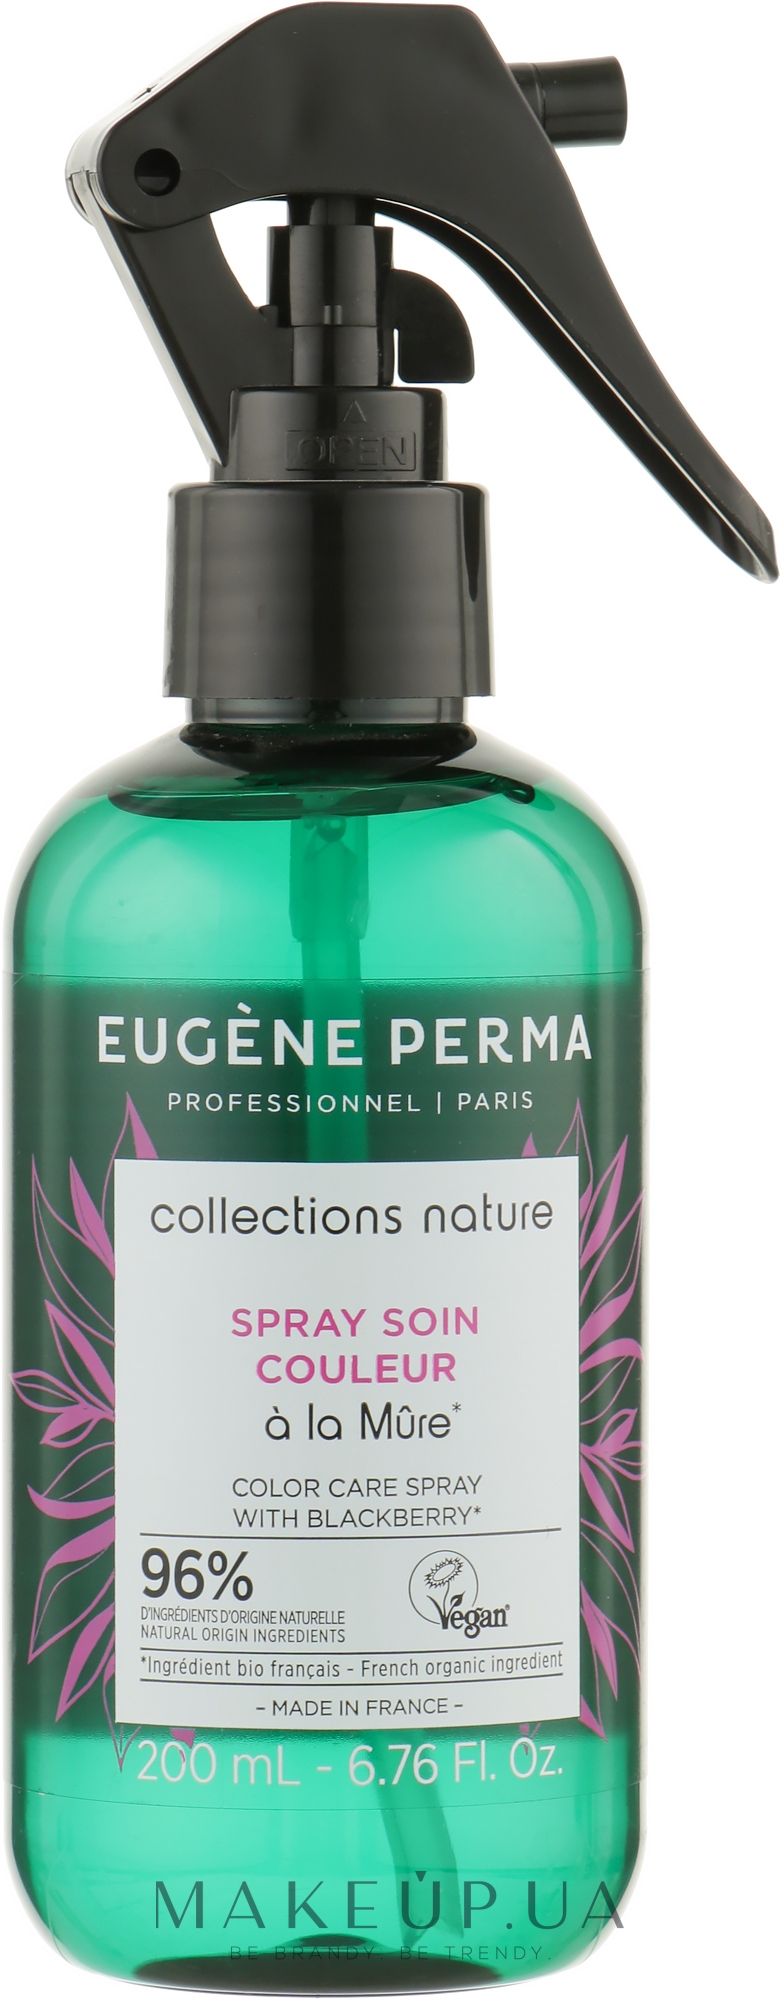 Спрей-Уход для окрашенных волос - Eugene Perma Collections Nature Spray Soin Couleur  — фото 200ml